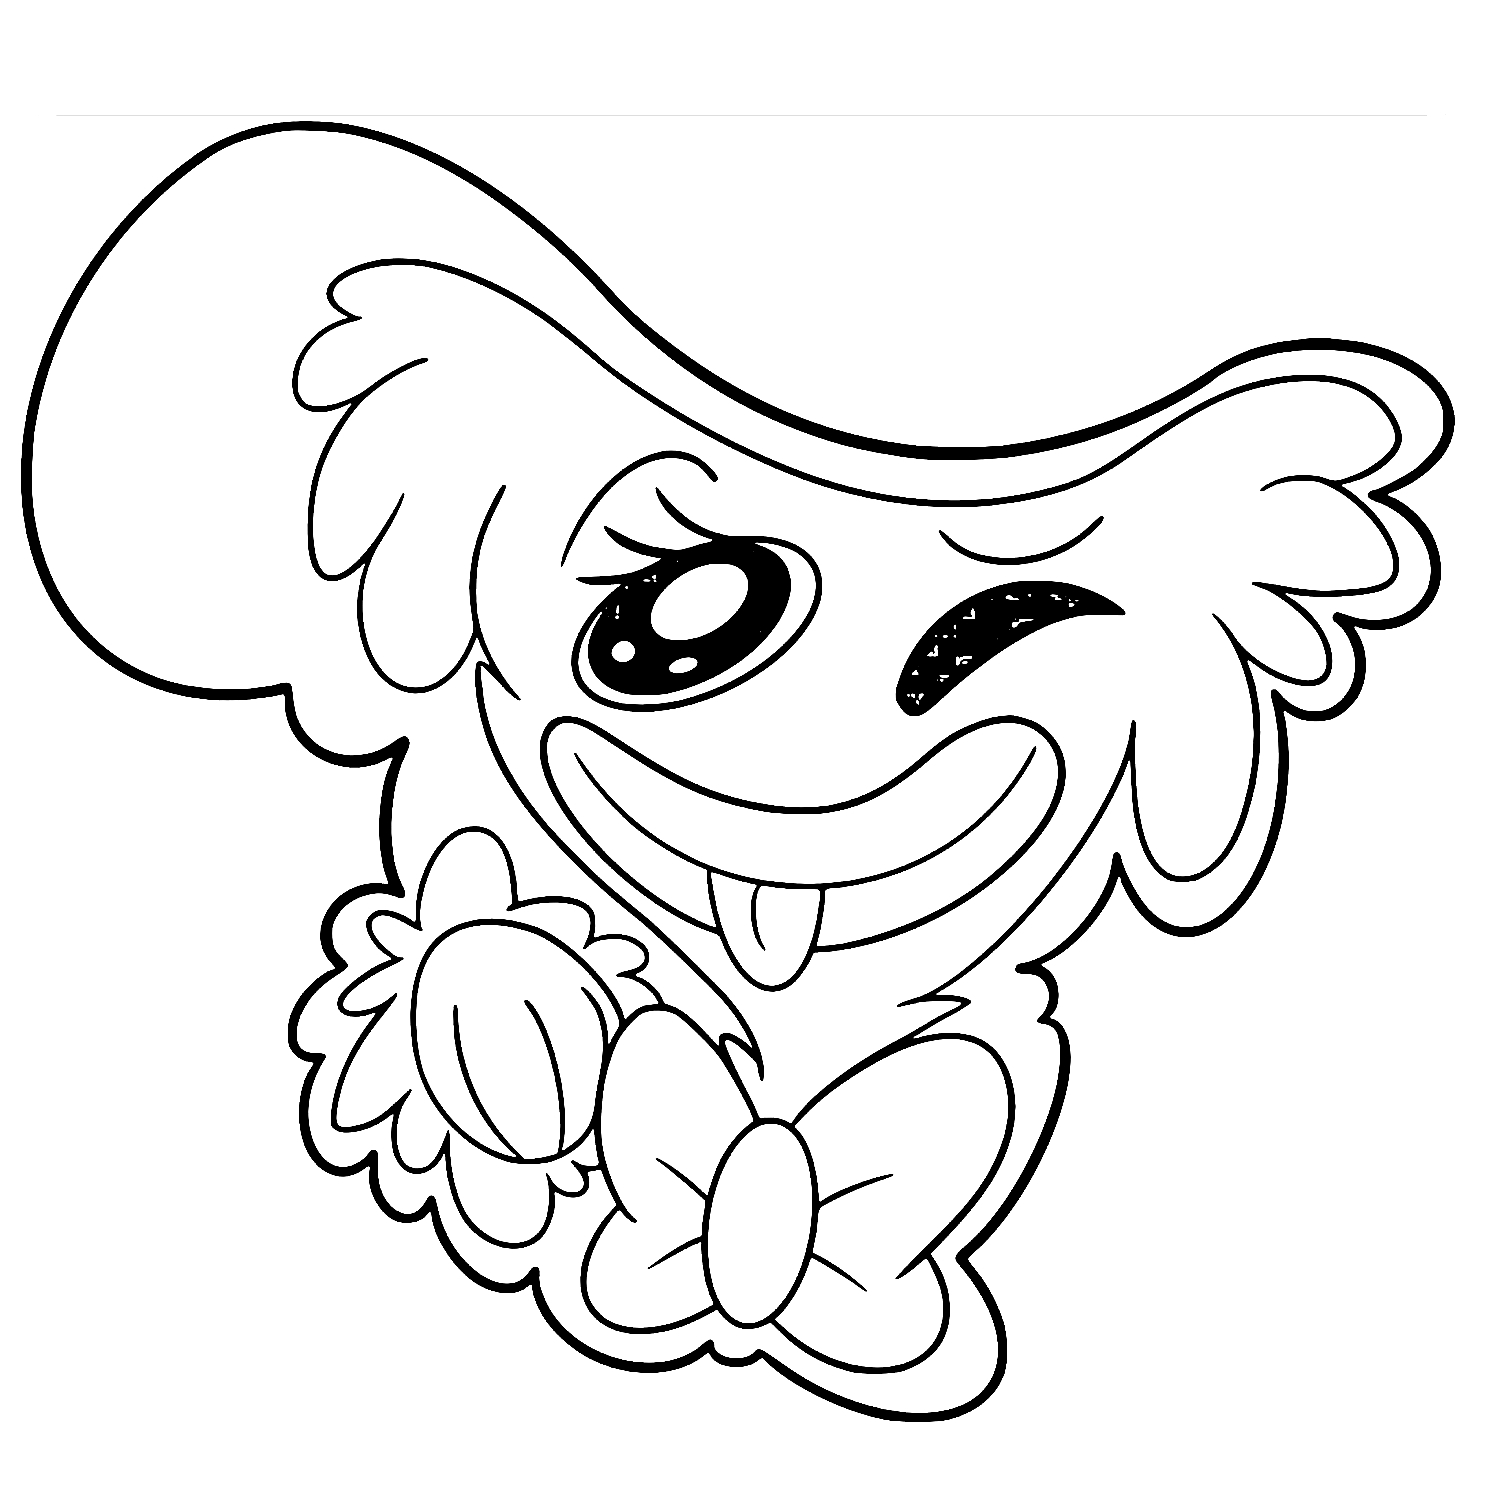 Desenho de Kissy Missy 15 de Poppy Playtime para imprimir e colorir